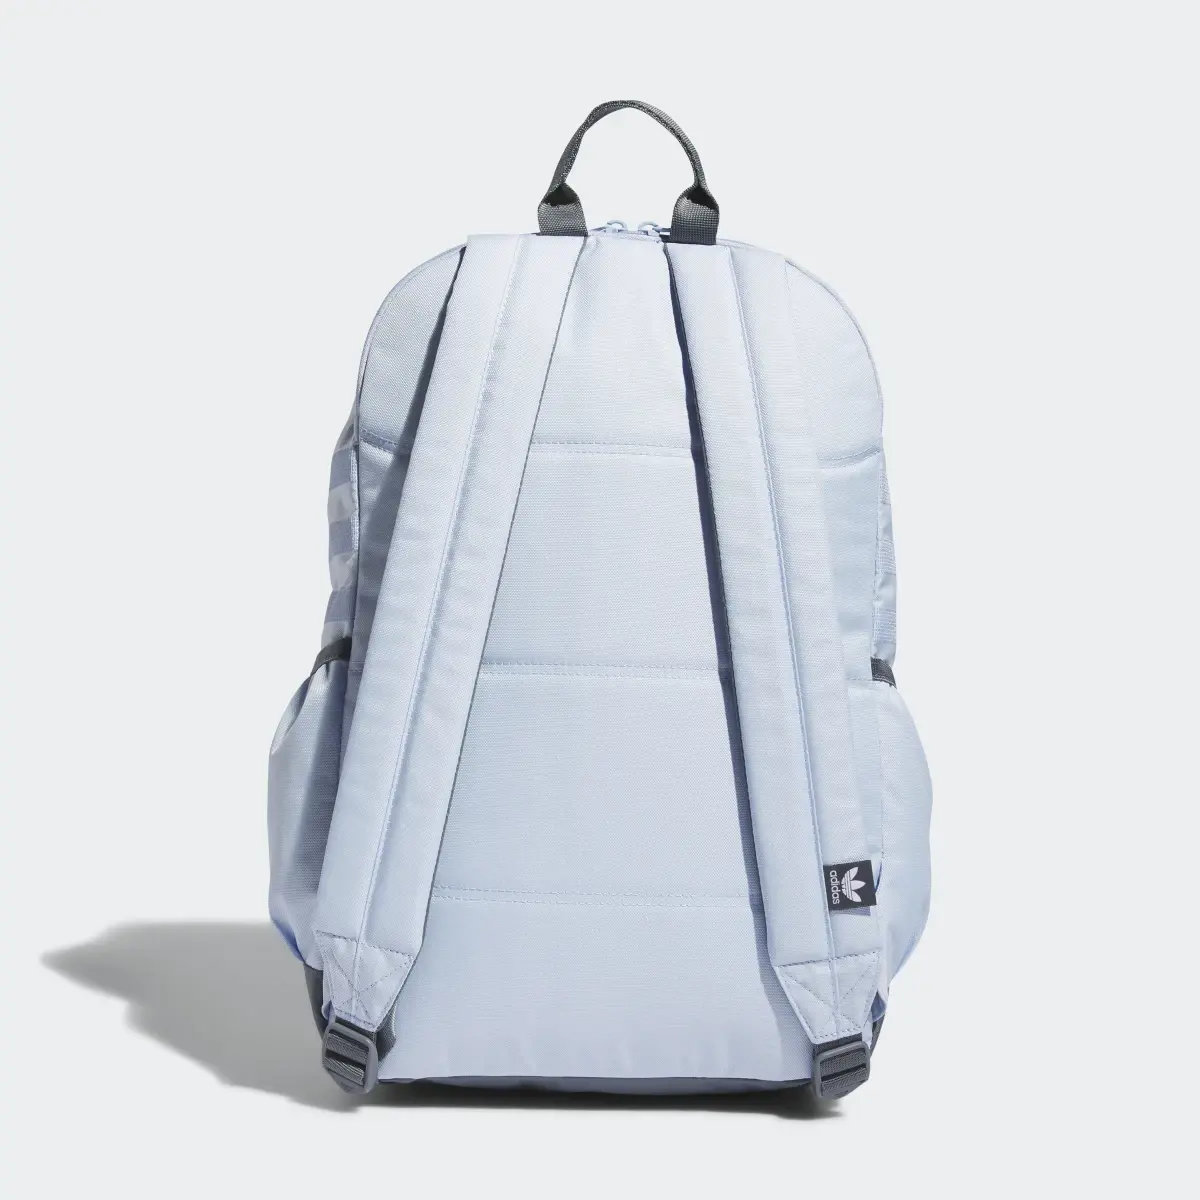 Adidas Originals National 3.0 Backpack. 3